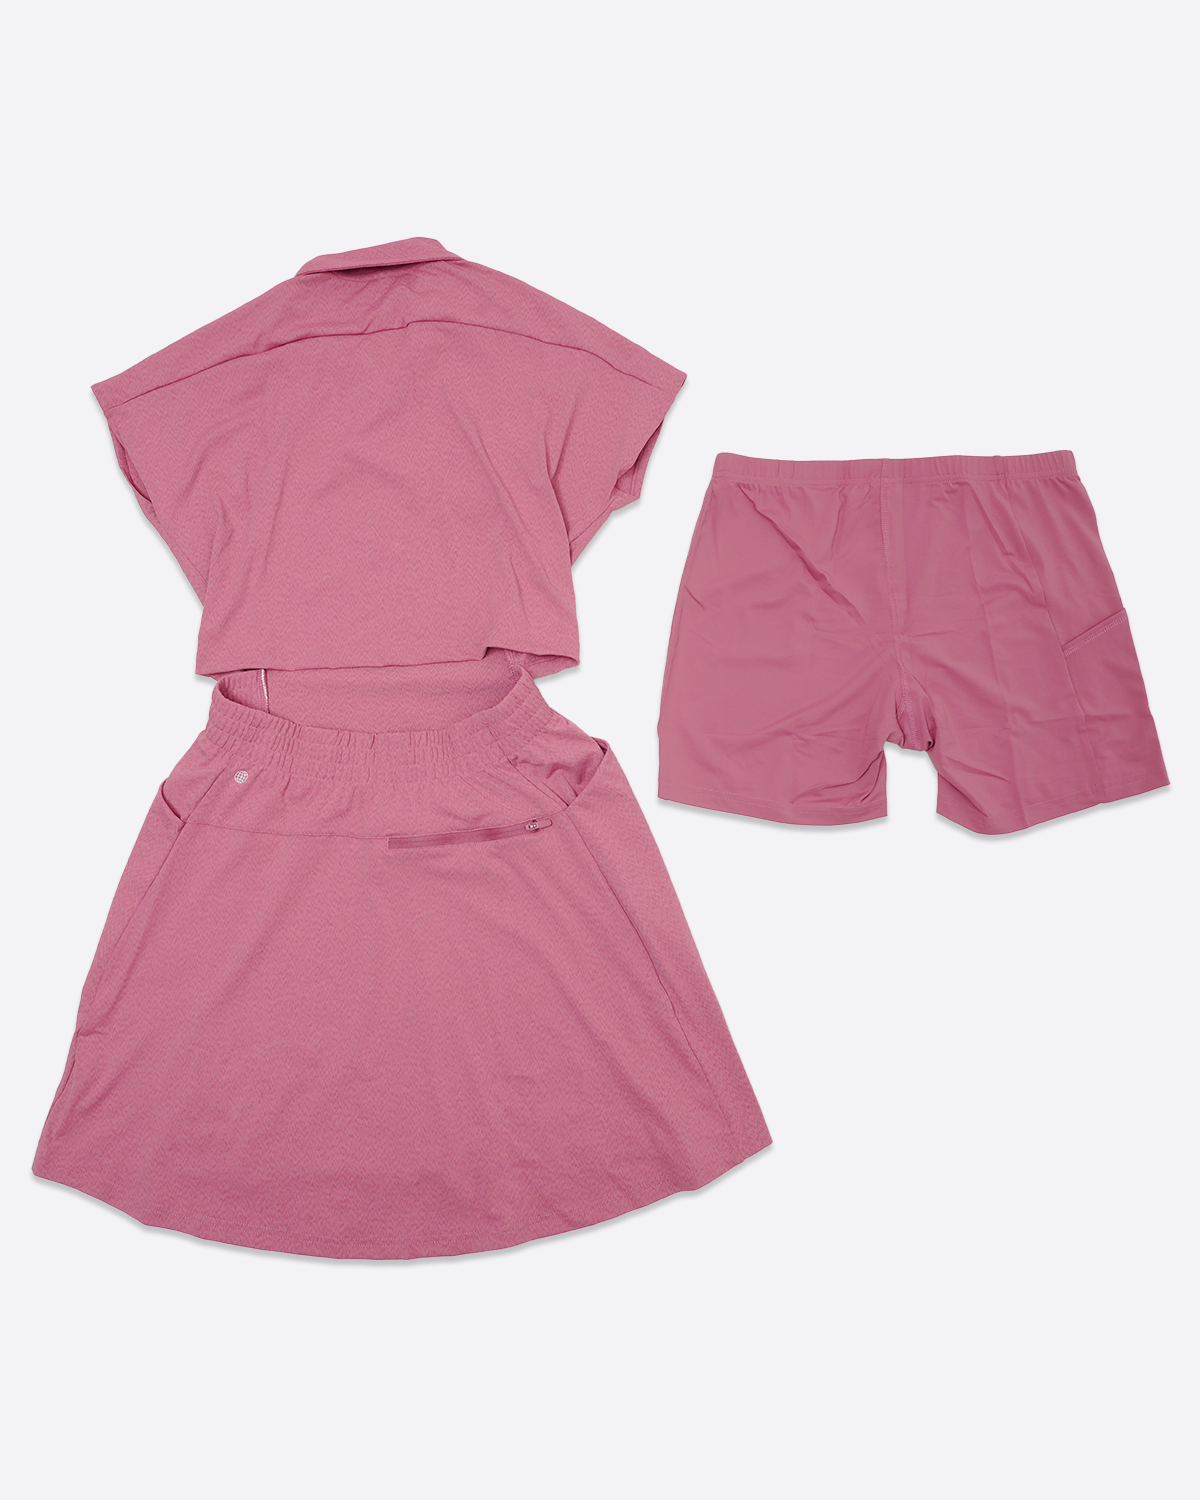 Adidas x GGC - Women's Go-To Dress - Pink